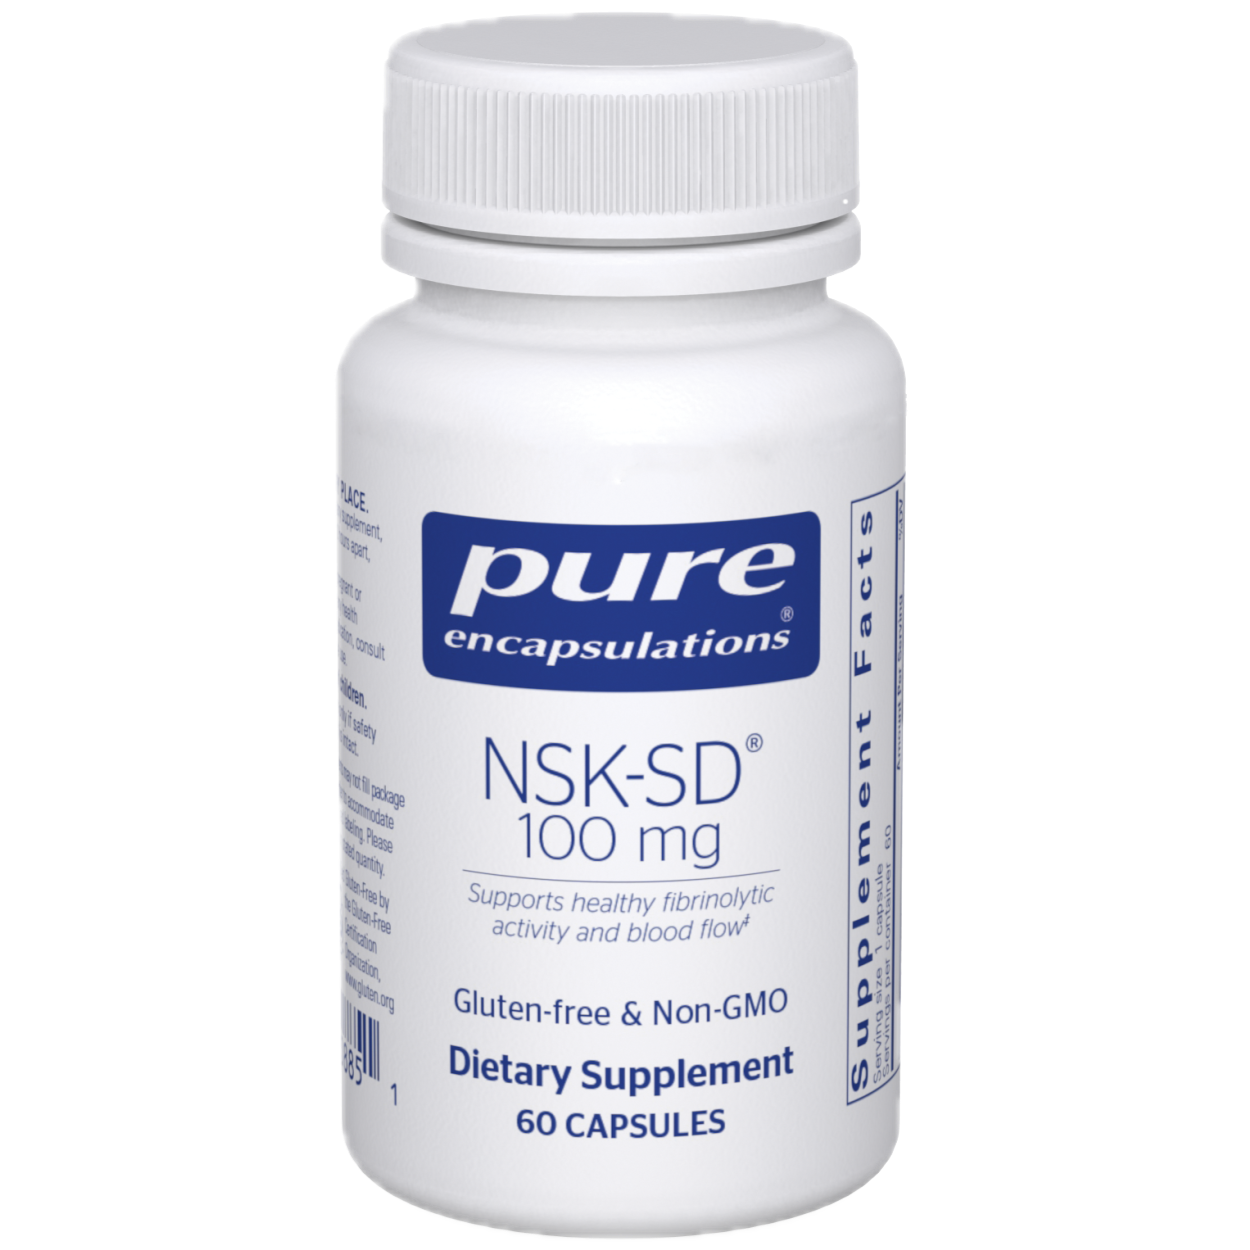 NSK-SD (Nattokinase) 100 mg-60ct